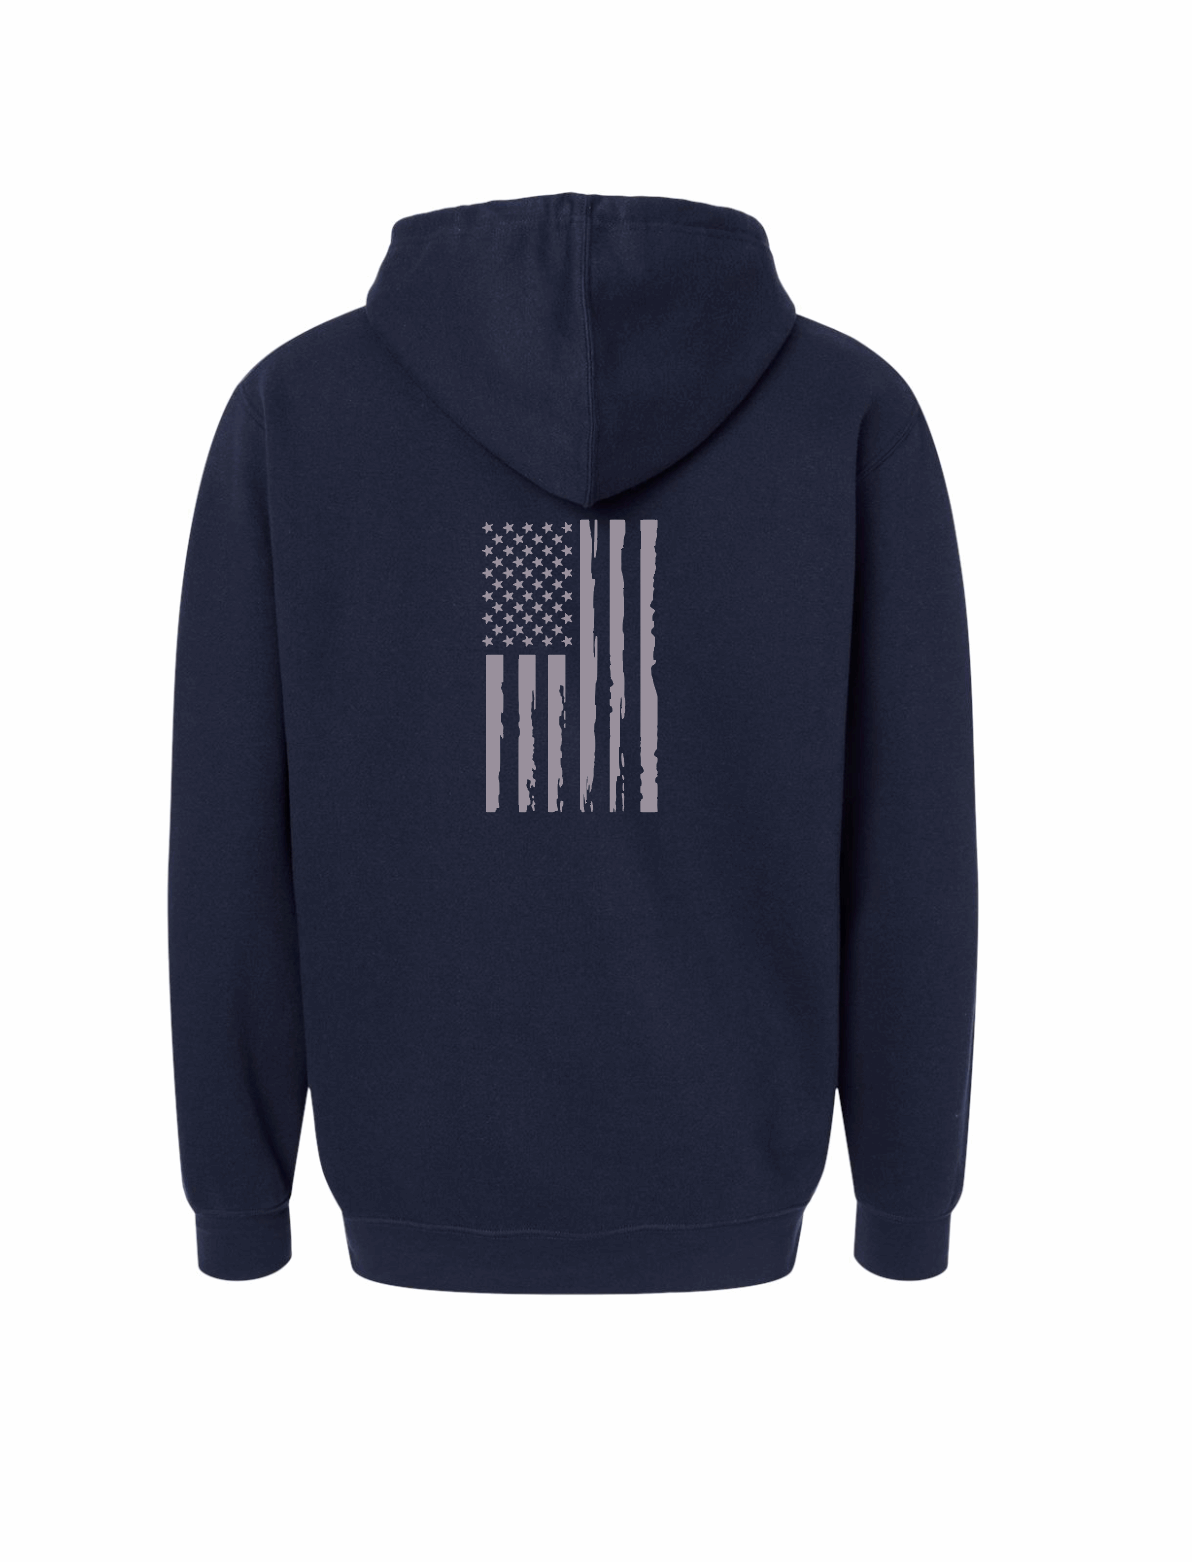 Elevated Fleece Hooded Sweatshirt / Navy / Salt and Sand / Patriotic